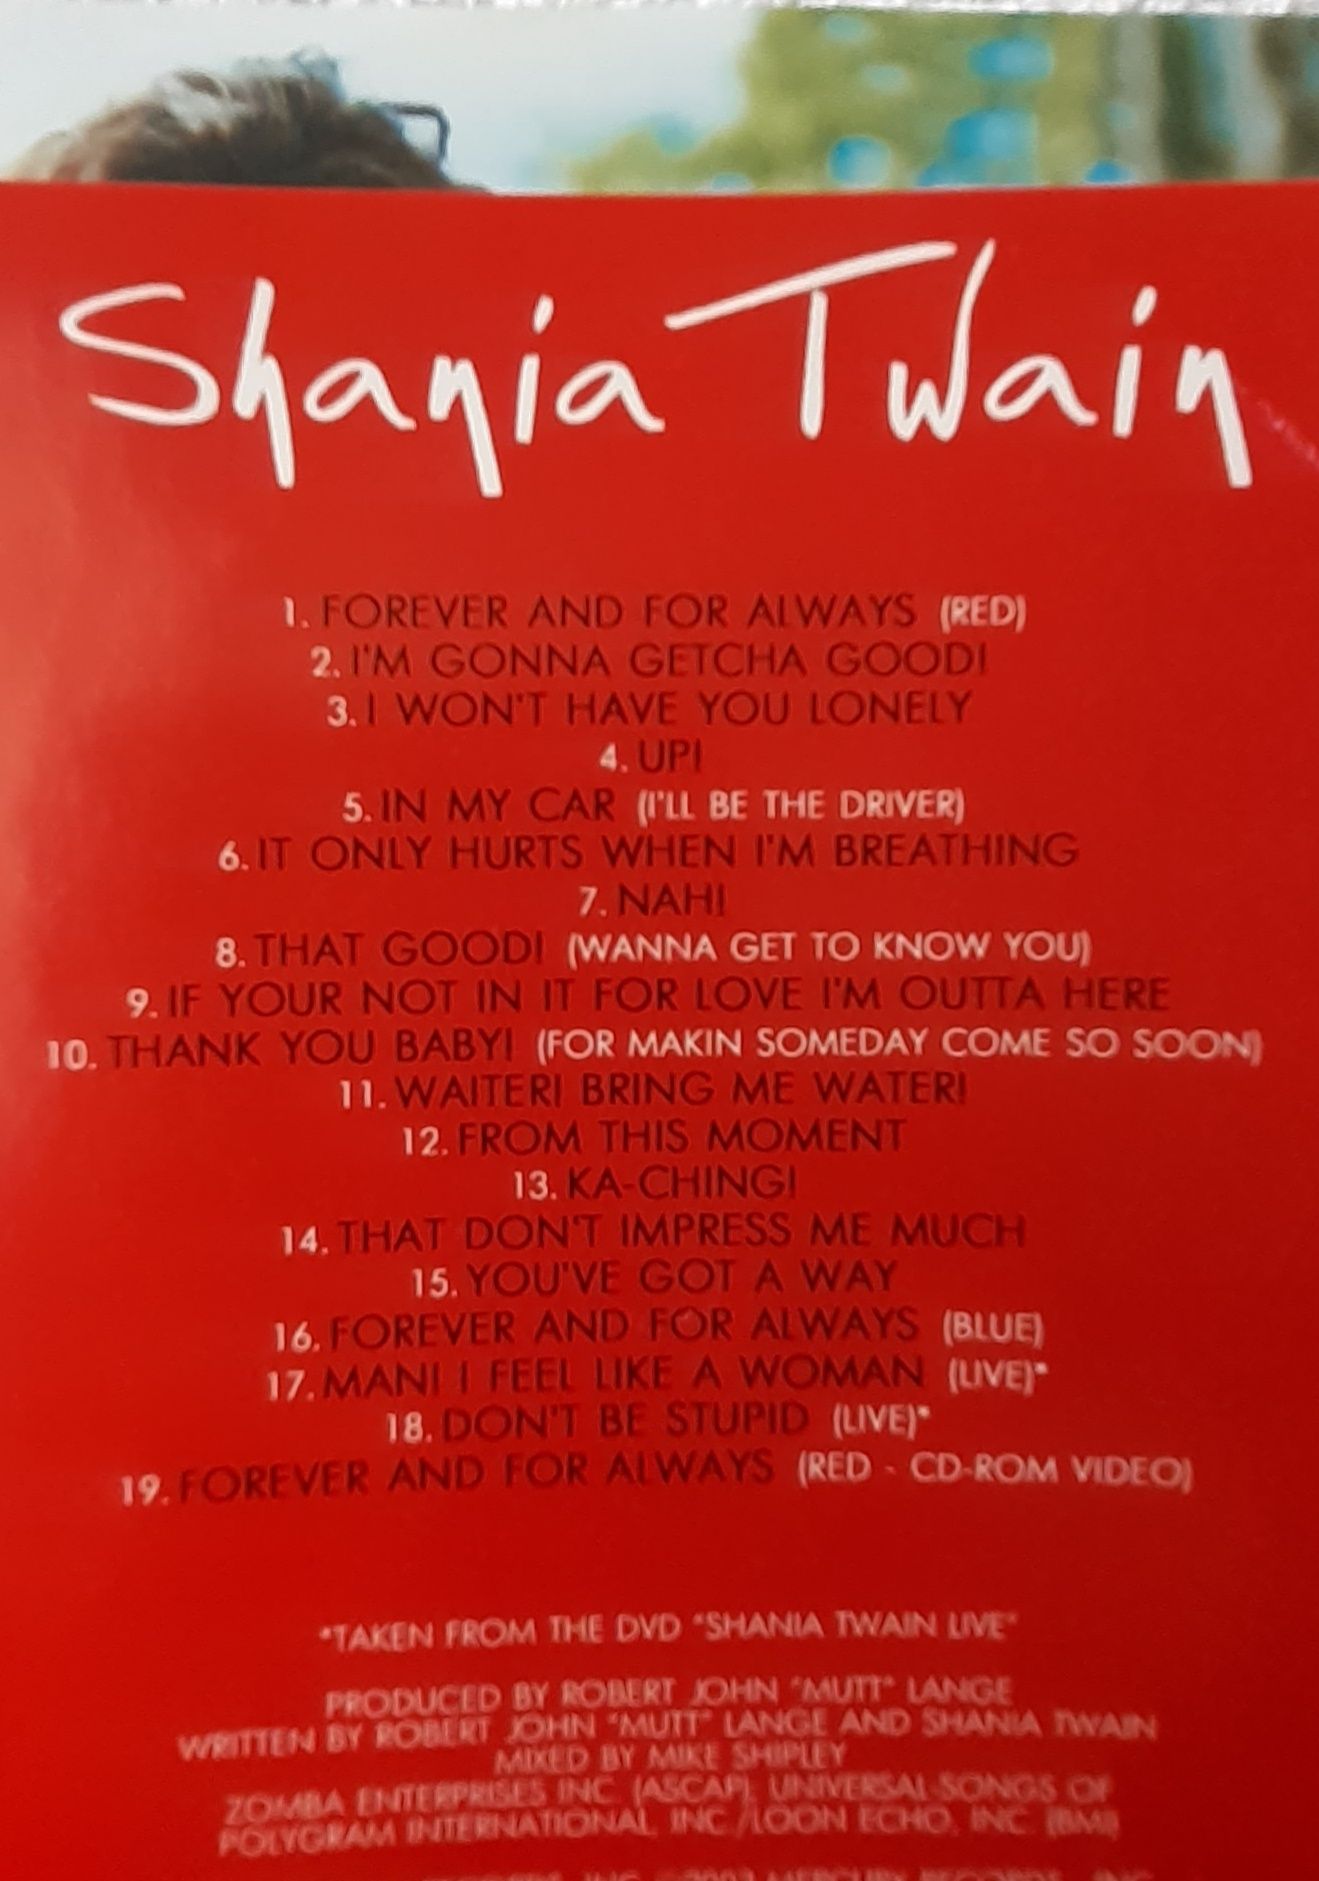 Shania Twain – zestaw trzech płyt CD (plus GRATIS)